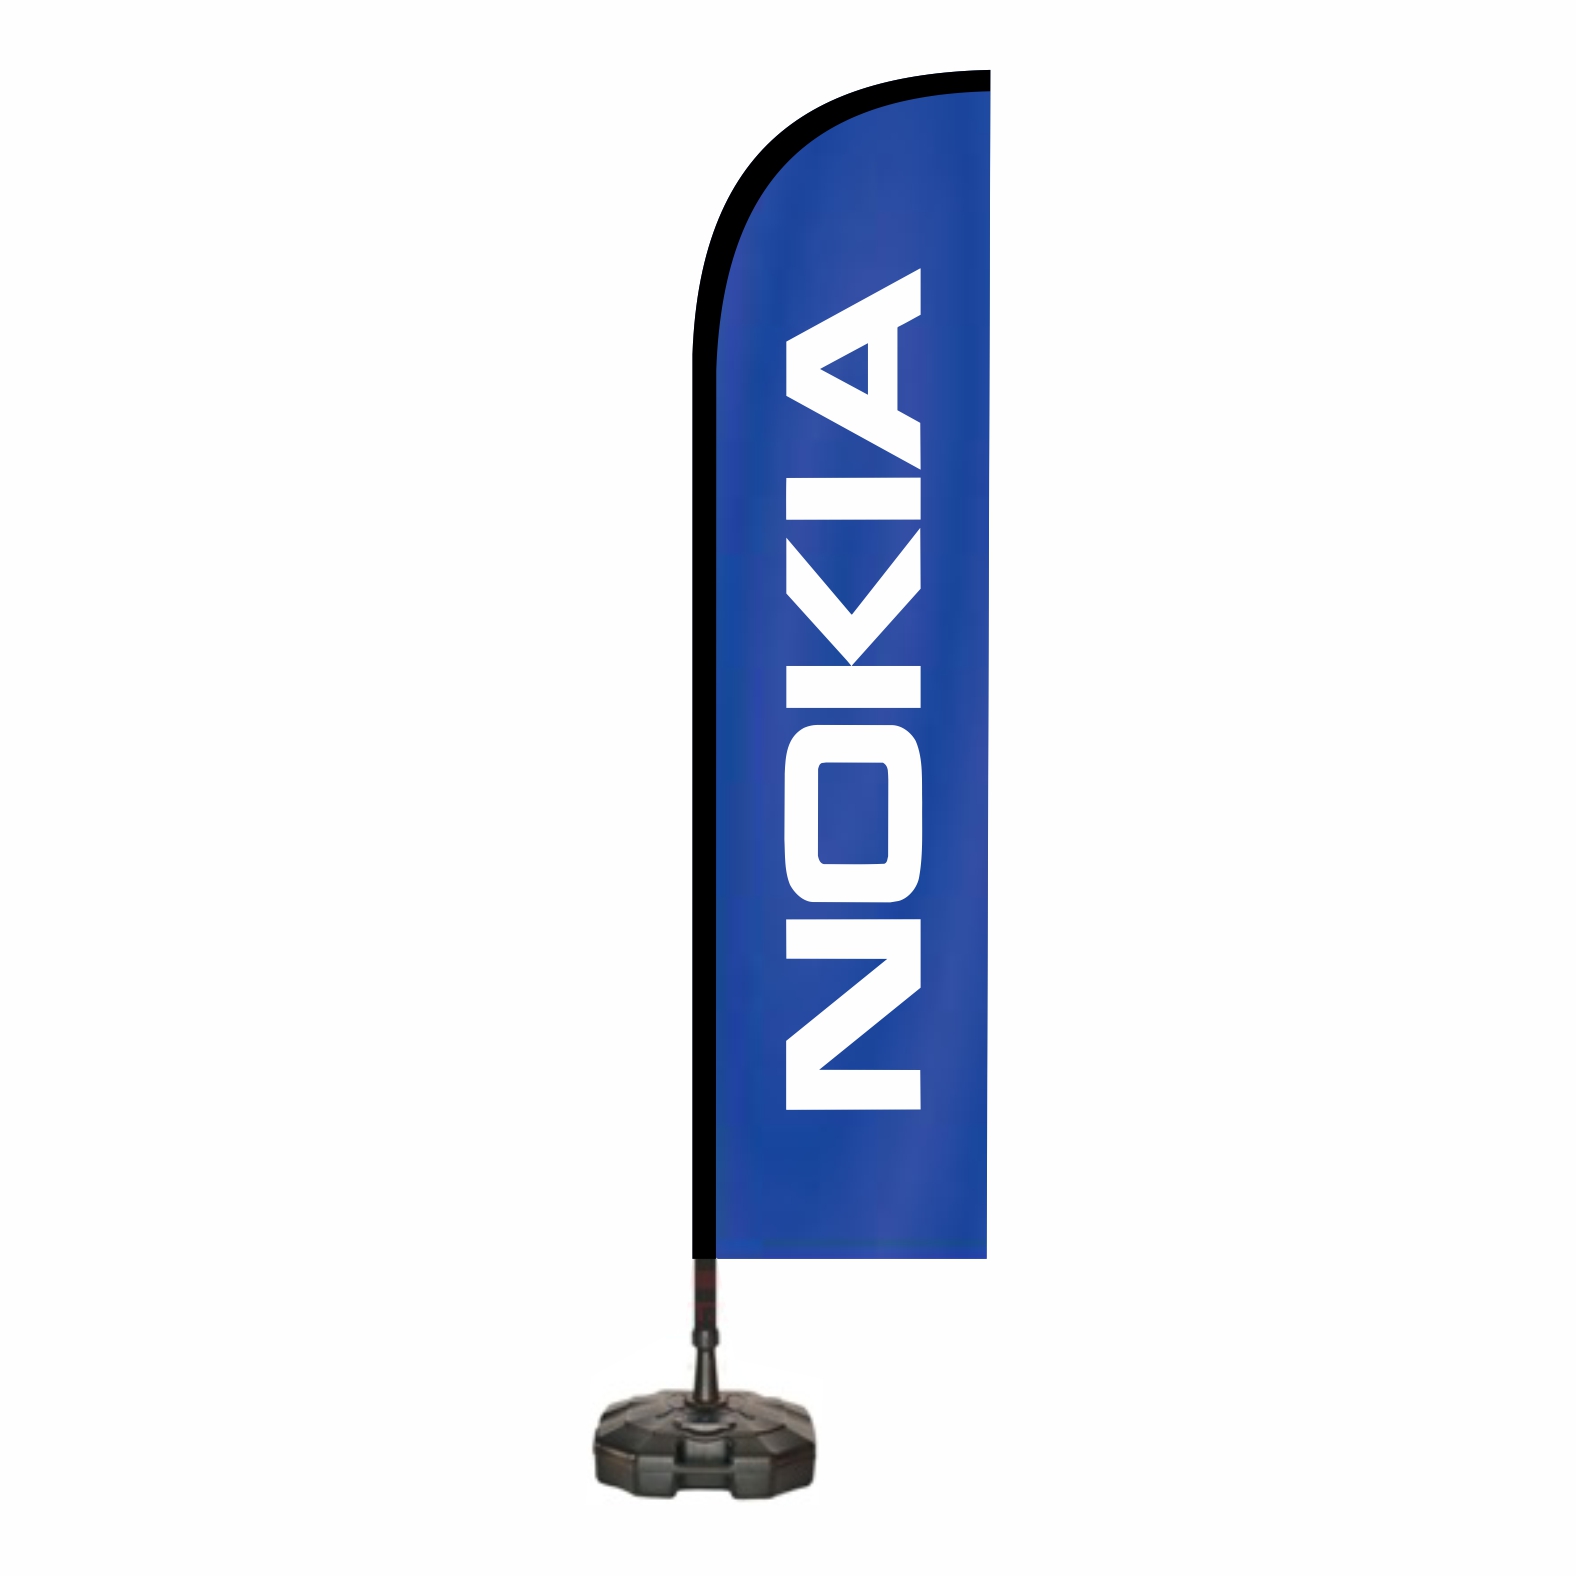 Nokia Yelken Bayraklar Toptan Alm